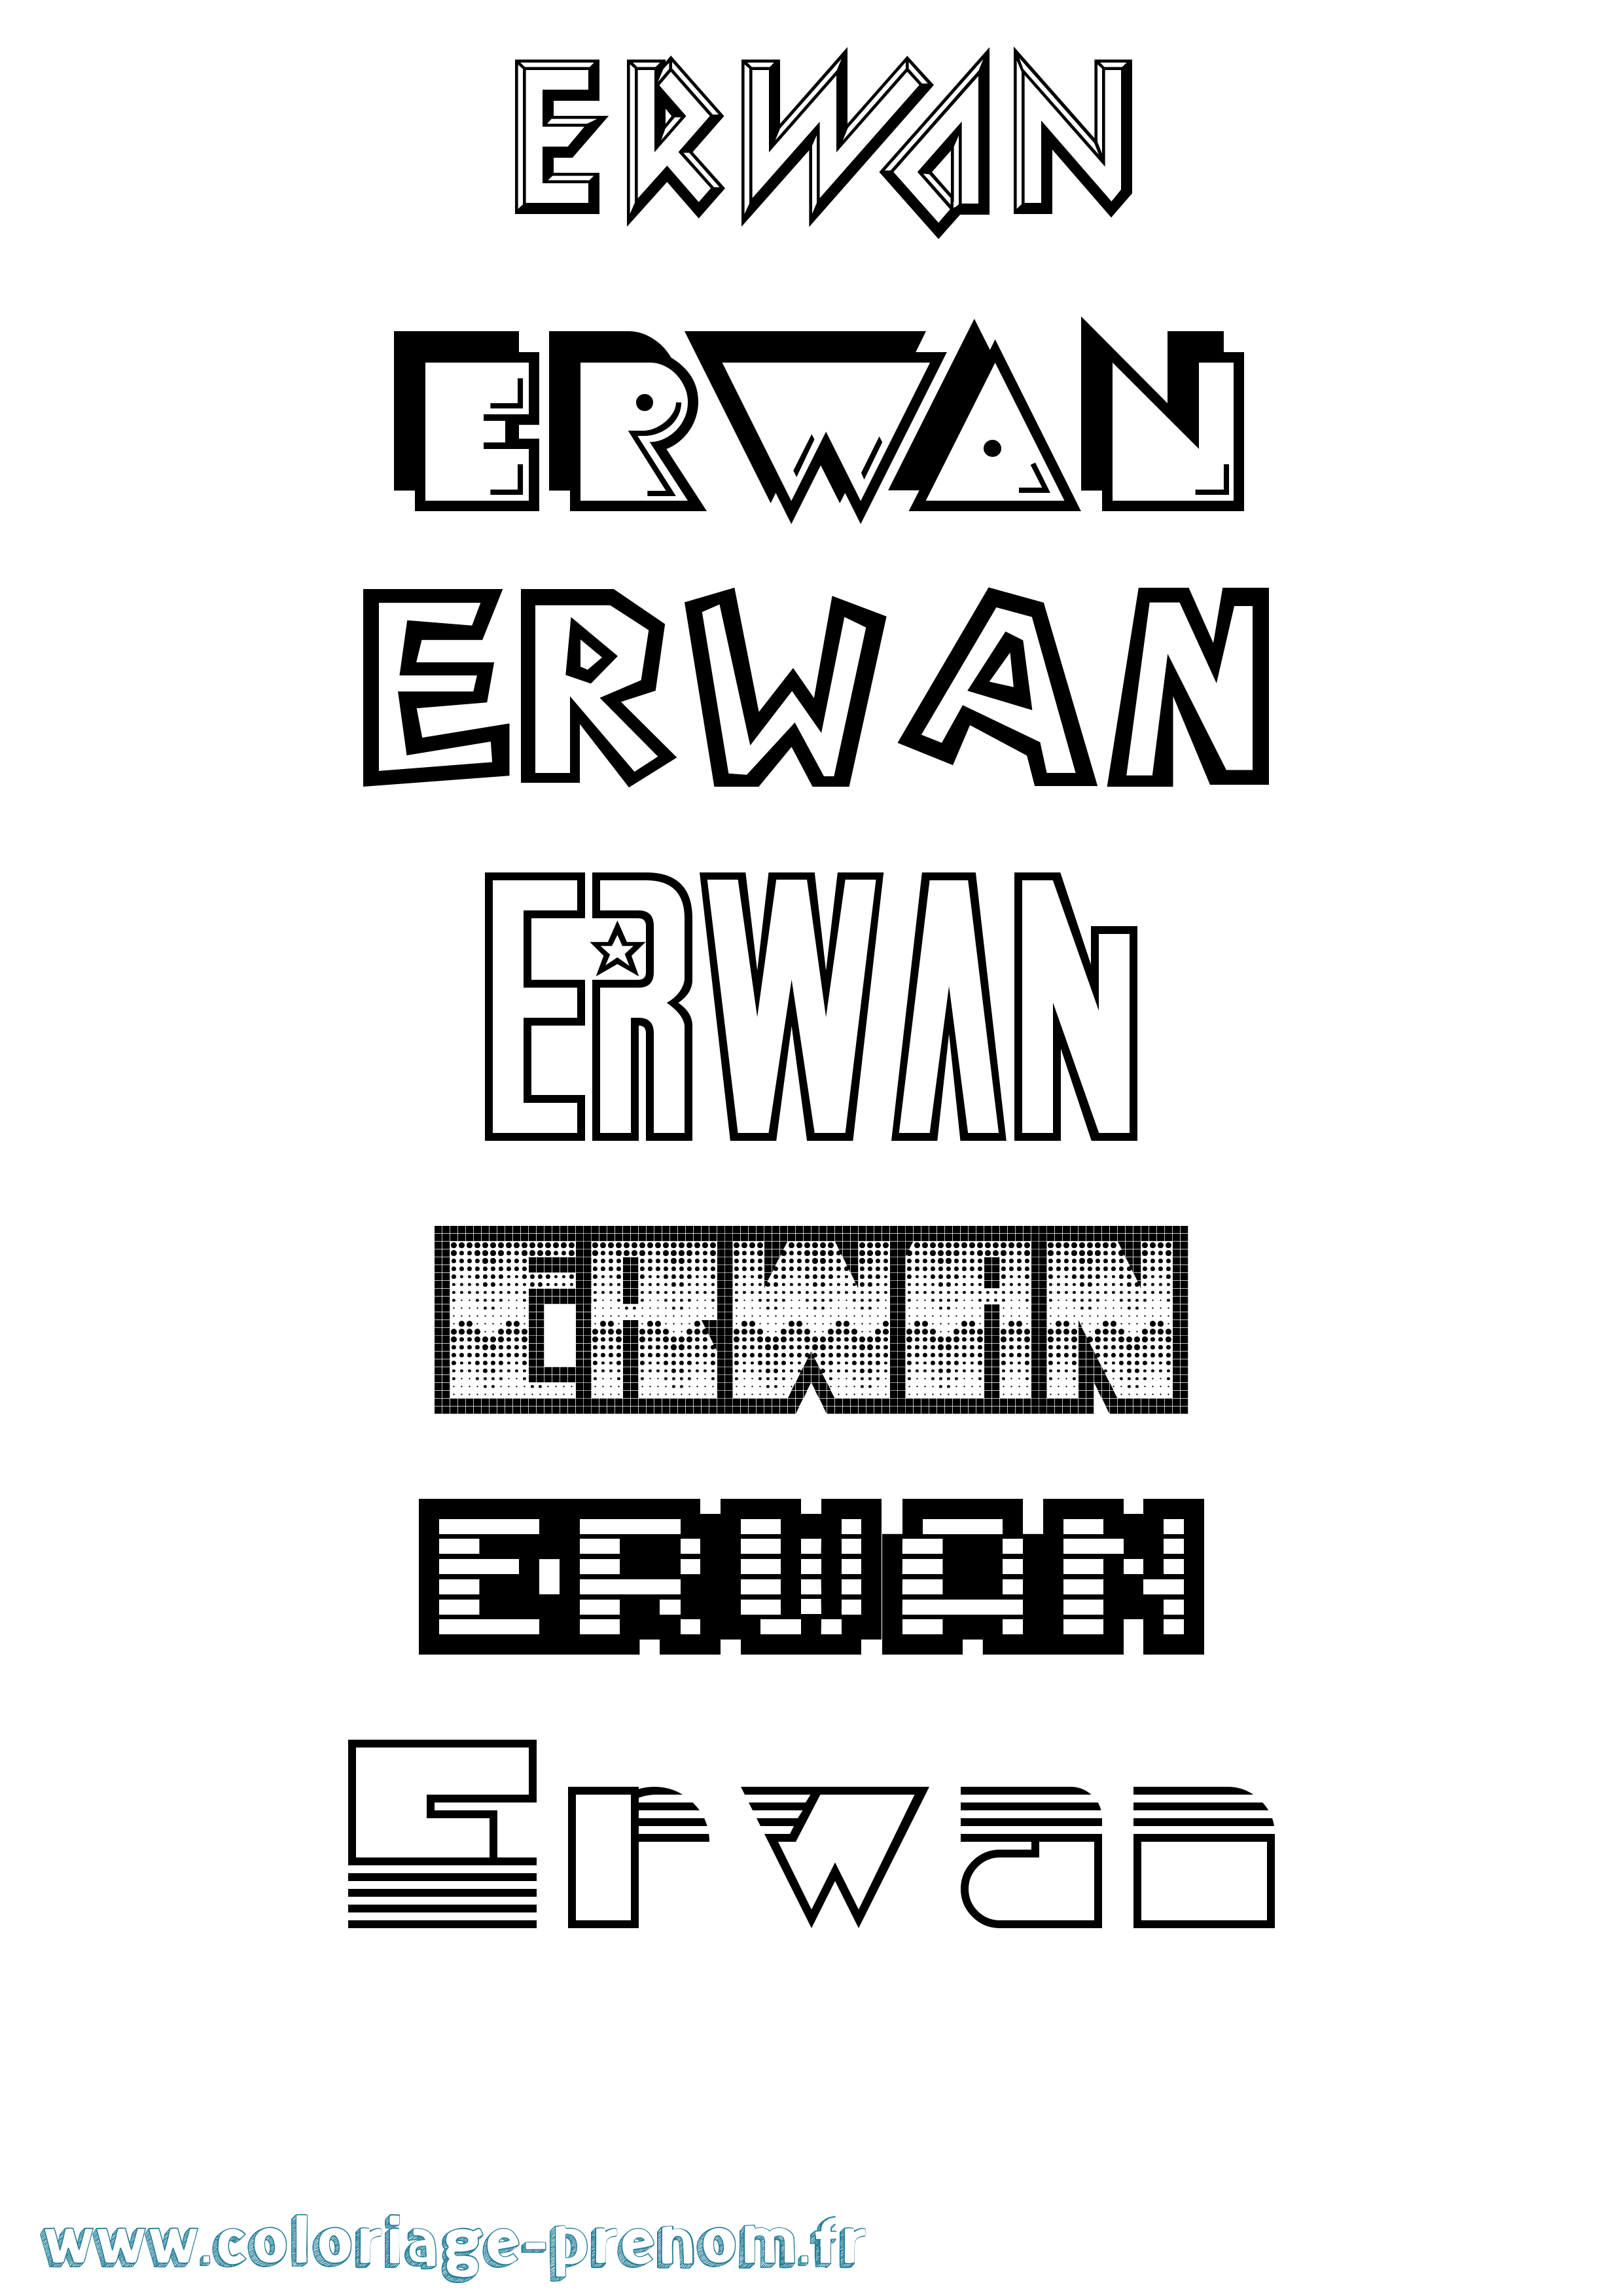 Coloriage prénom Erwan